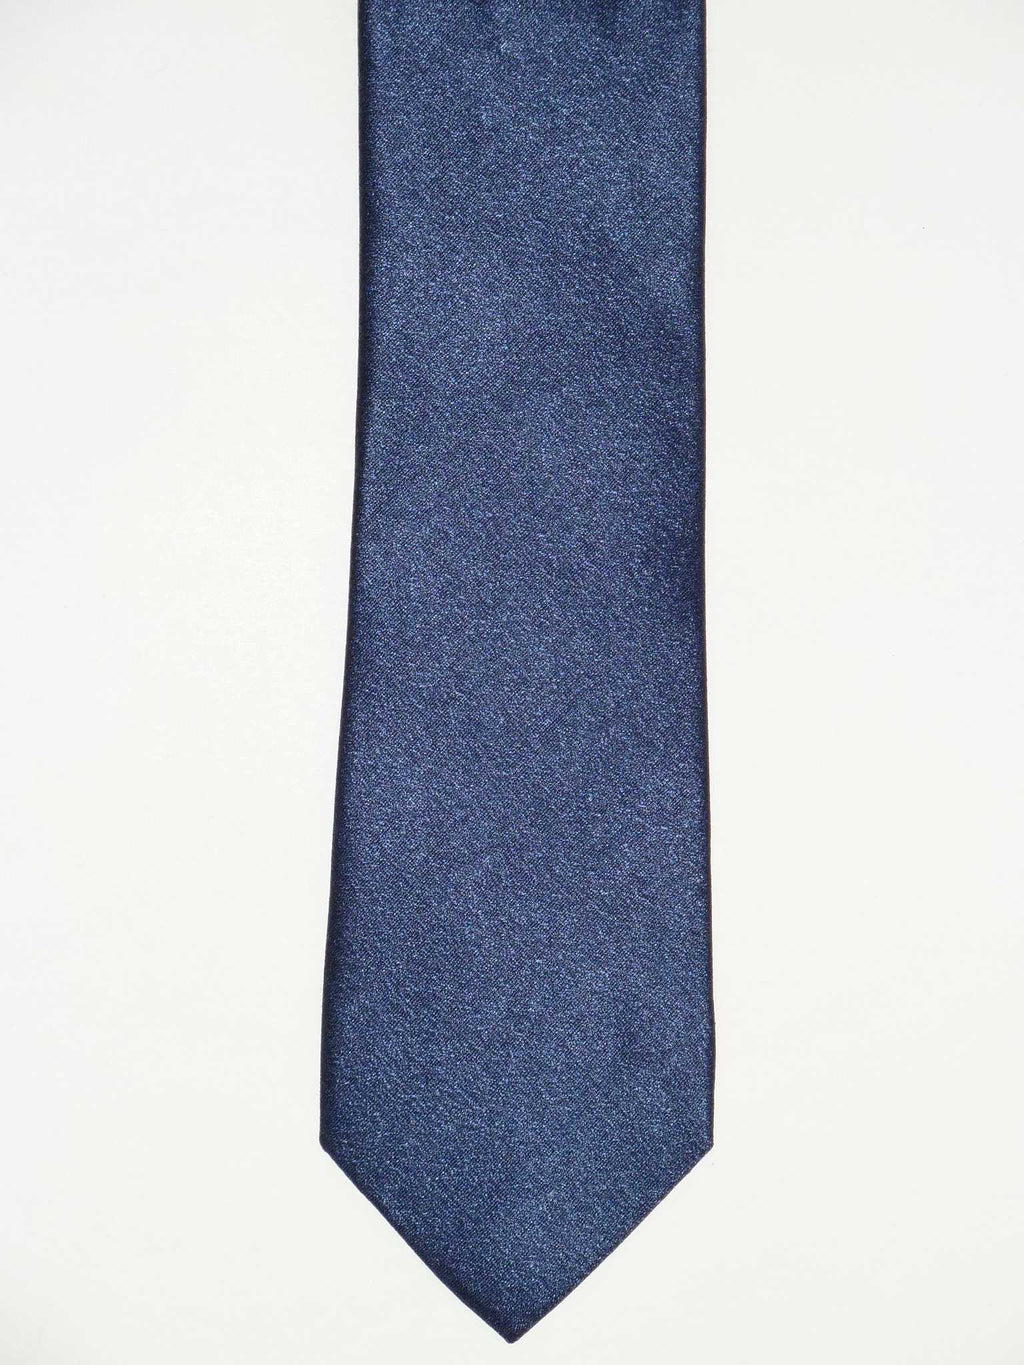 Krawatte, 100% Seide, Royalblau MAICA Krawattenfabrik Struktur, offene 7,5cm, –